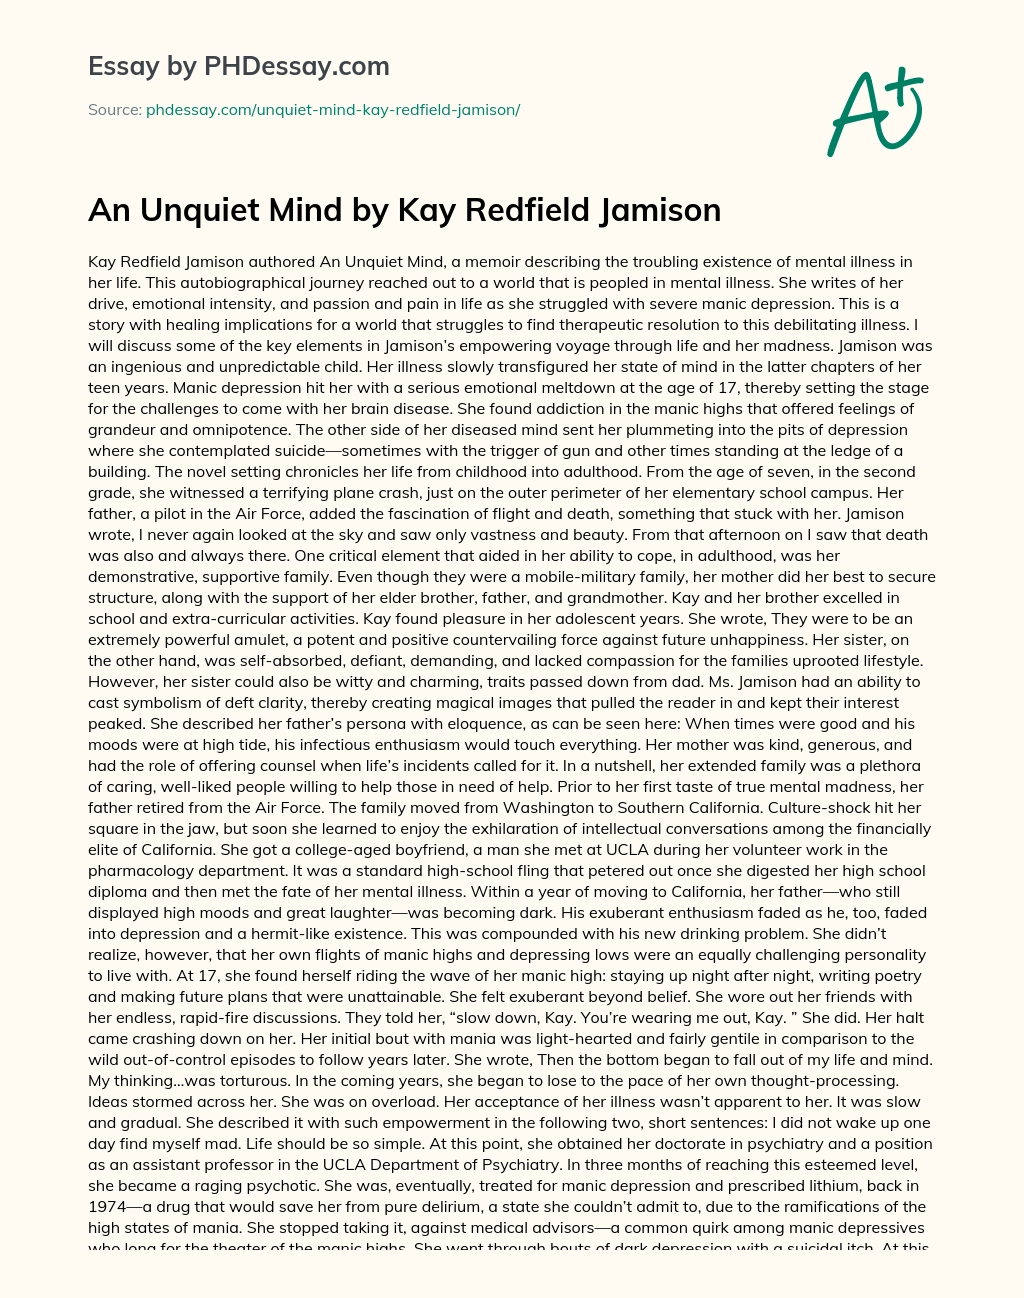 An Unquiet Mind by Kay Redfield Jamison essay